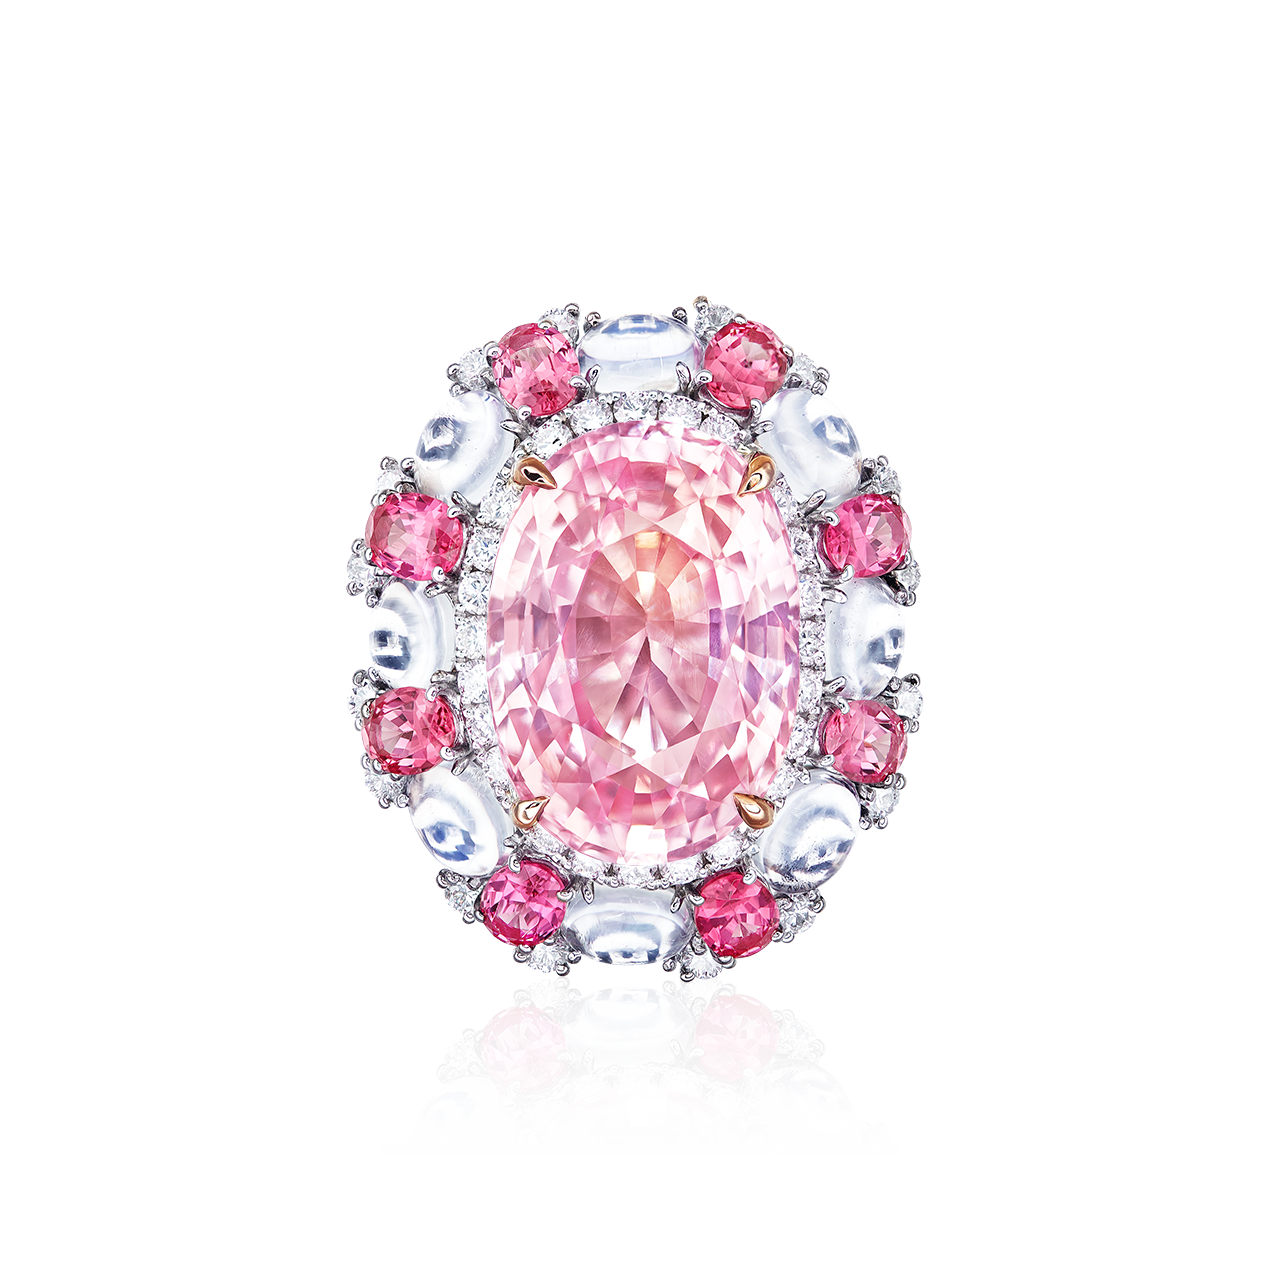 14.55克拉 斯里蘭卡天然無燒蓮花剛玉鑽戒
Padparadscha Sapphire from Sri Lanka 
and Diamond Ring